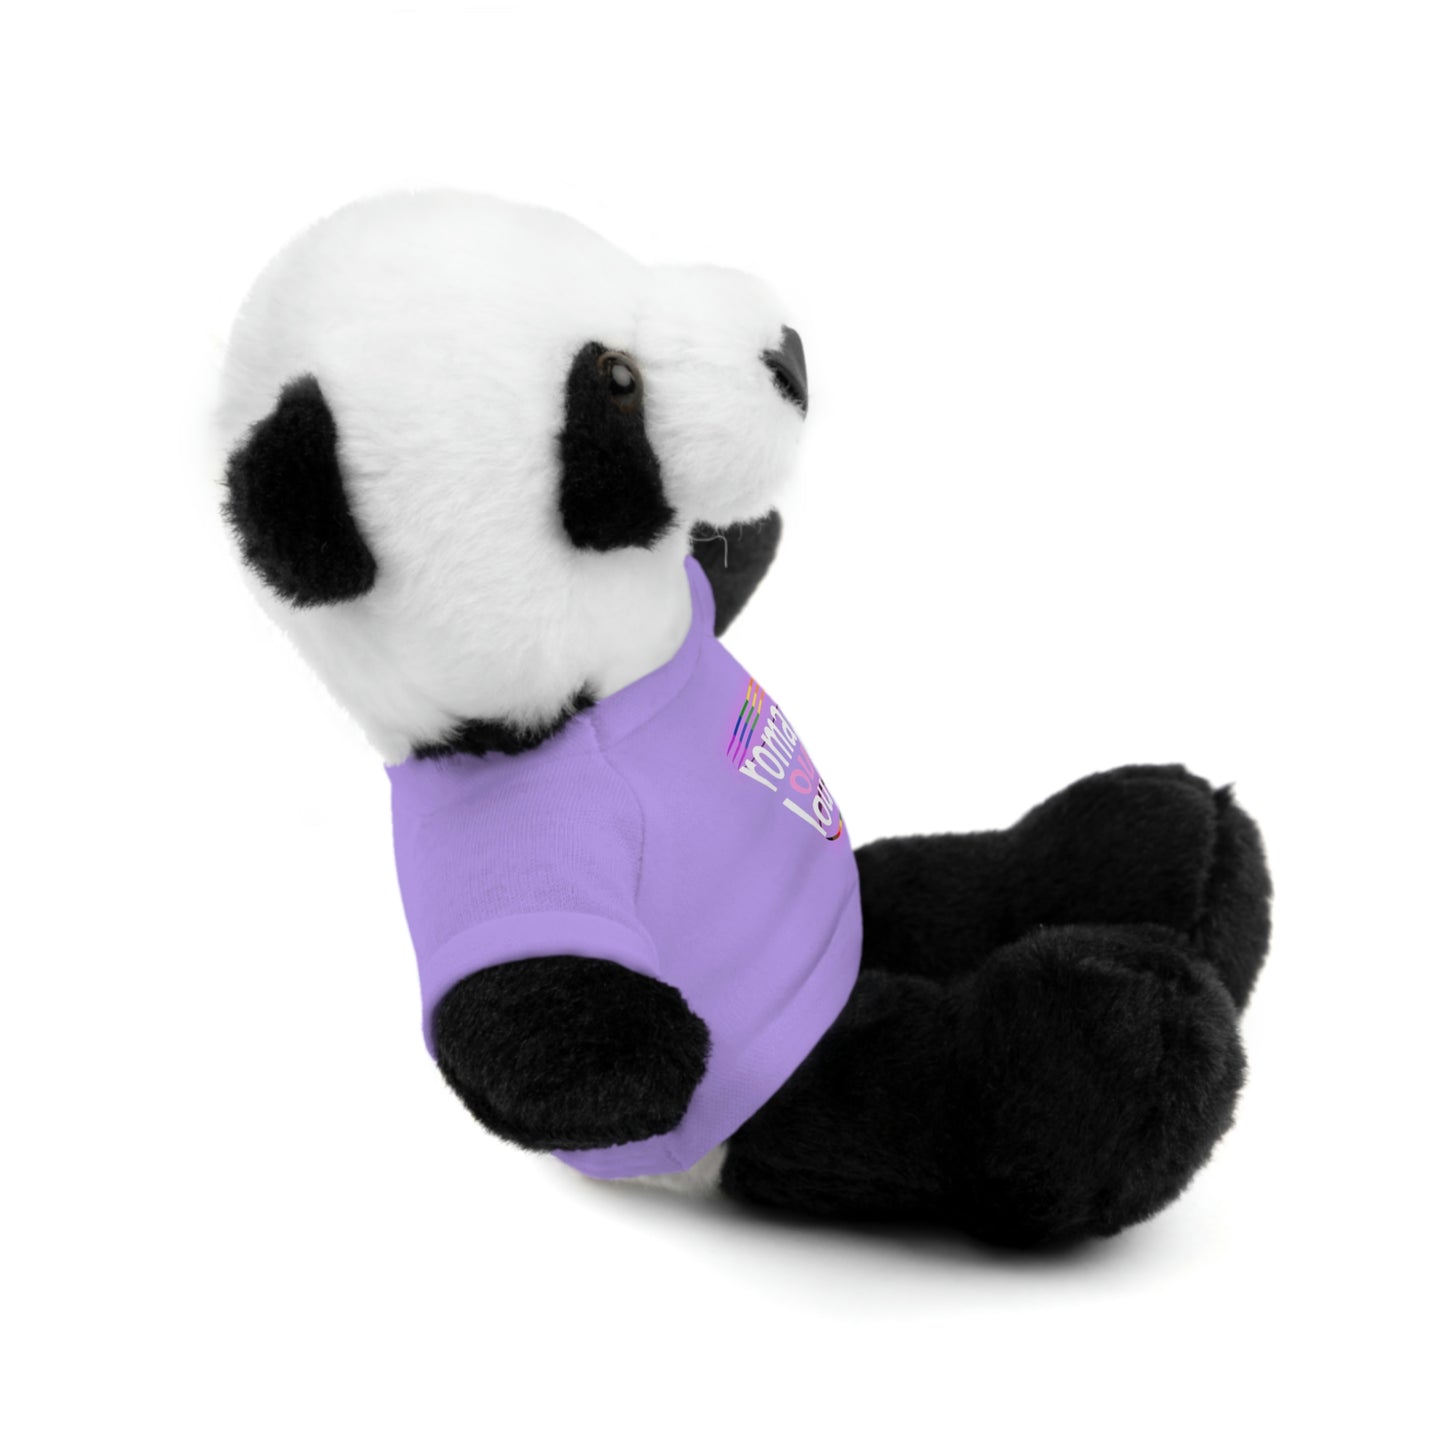 Stuffed Animals with Tee (Dark)